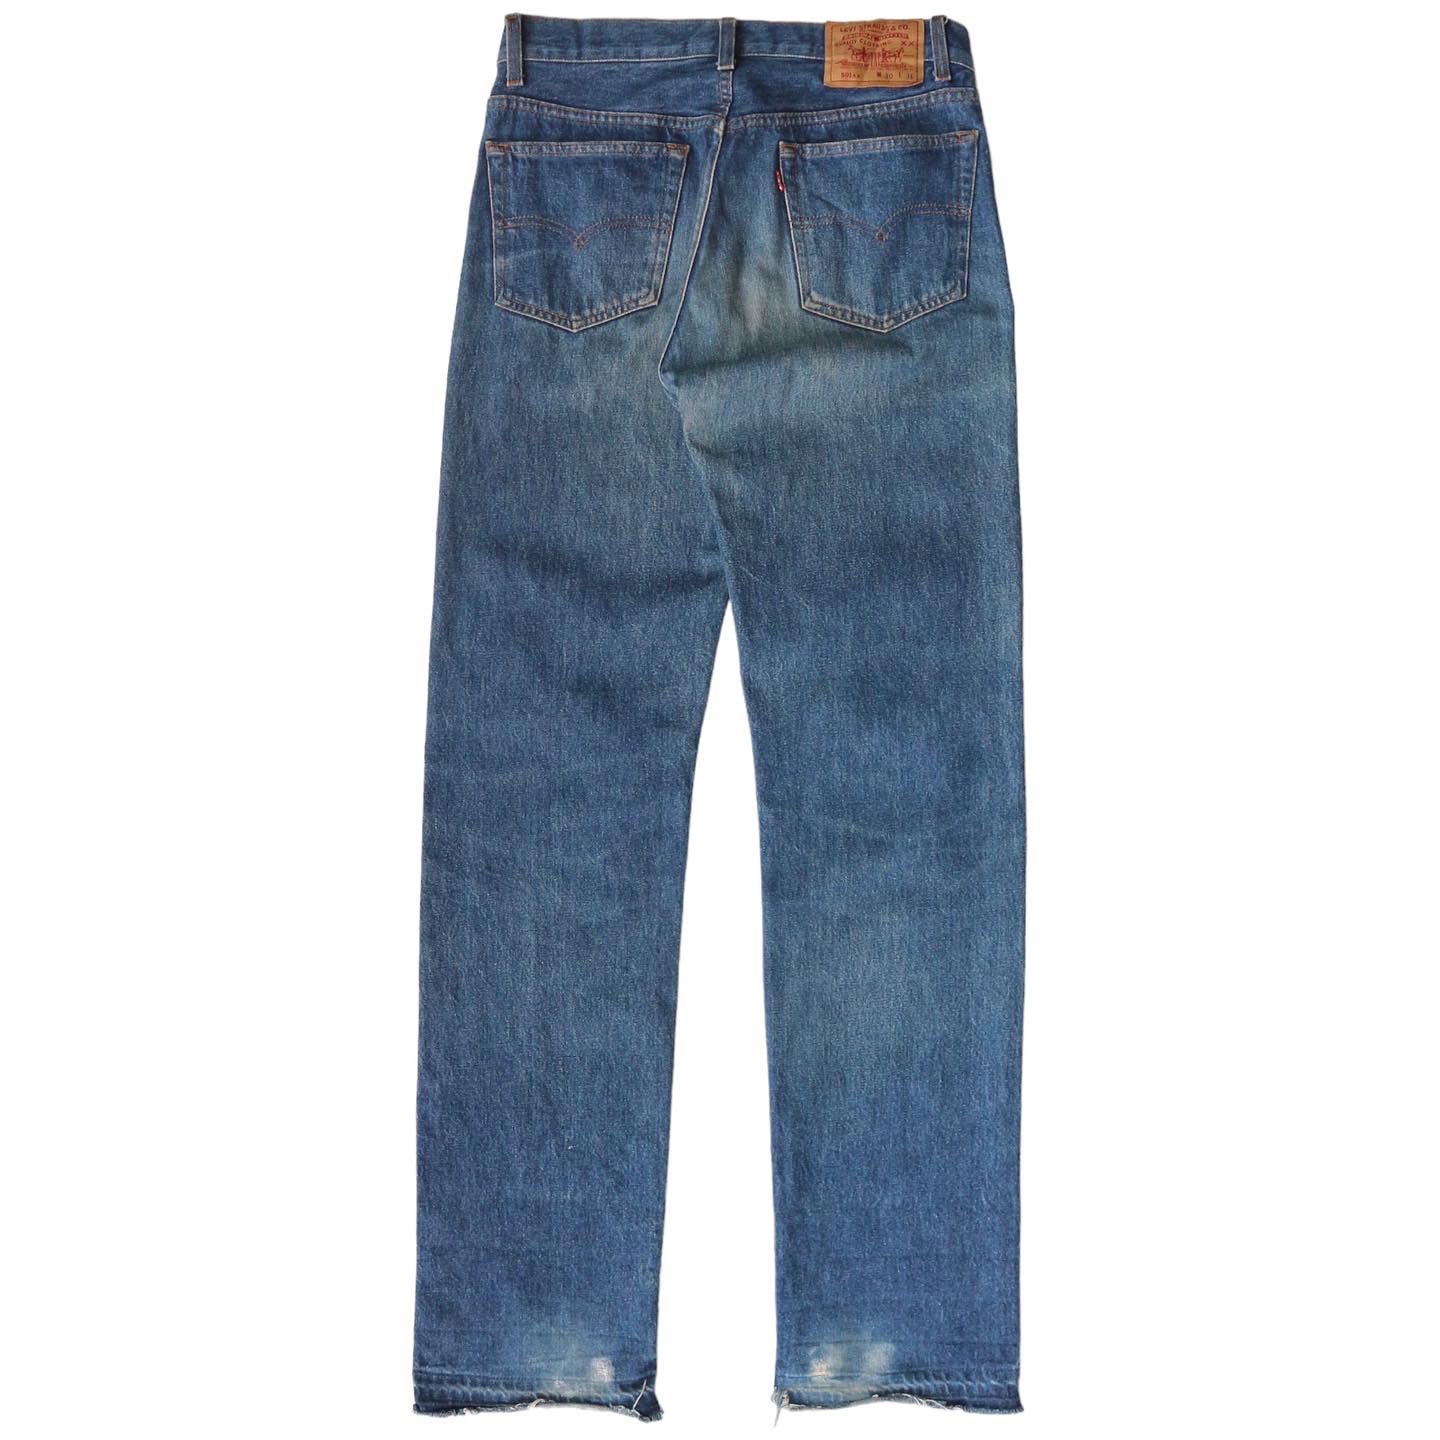 90s Levi's 501 USA Denim Jeans Size 28/29 denimister